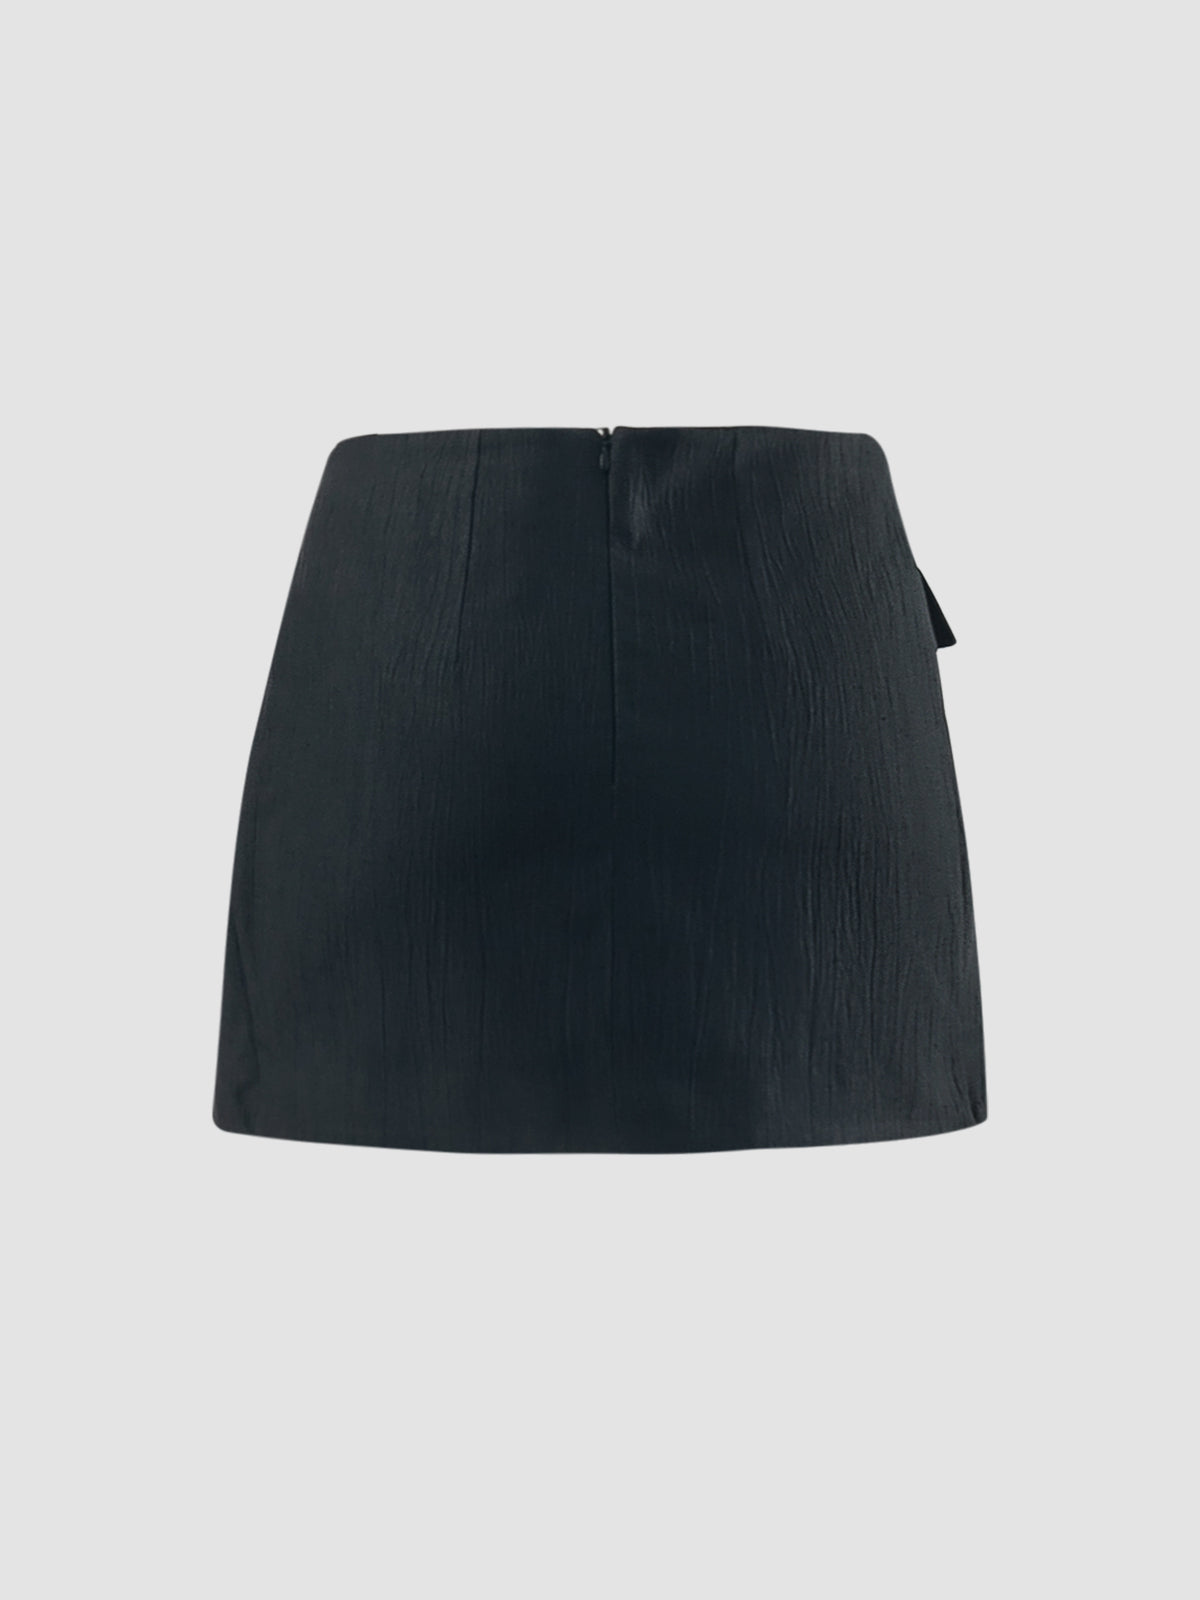 Black denim mini skirt with distressed details – PILLAR